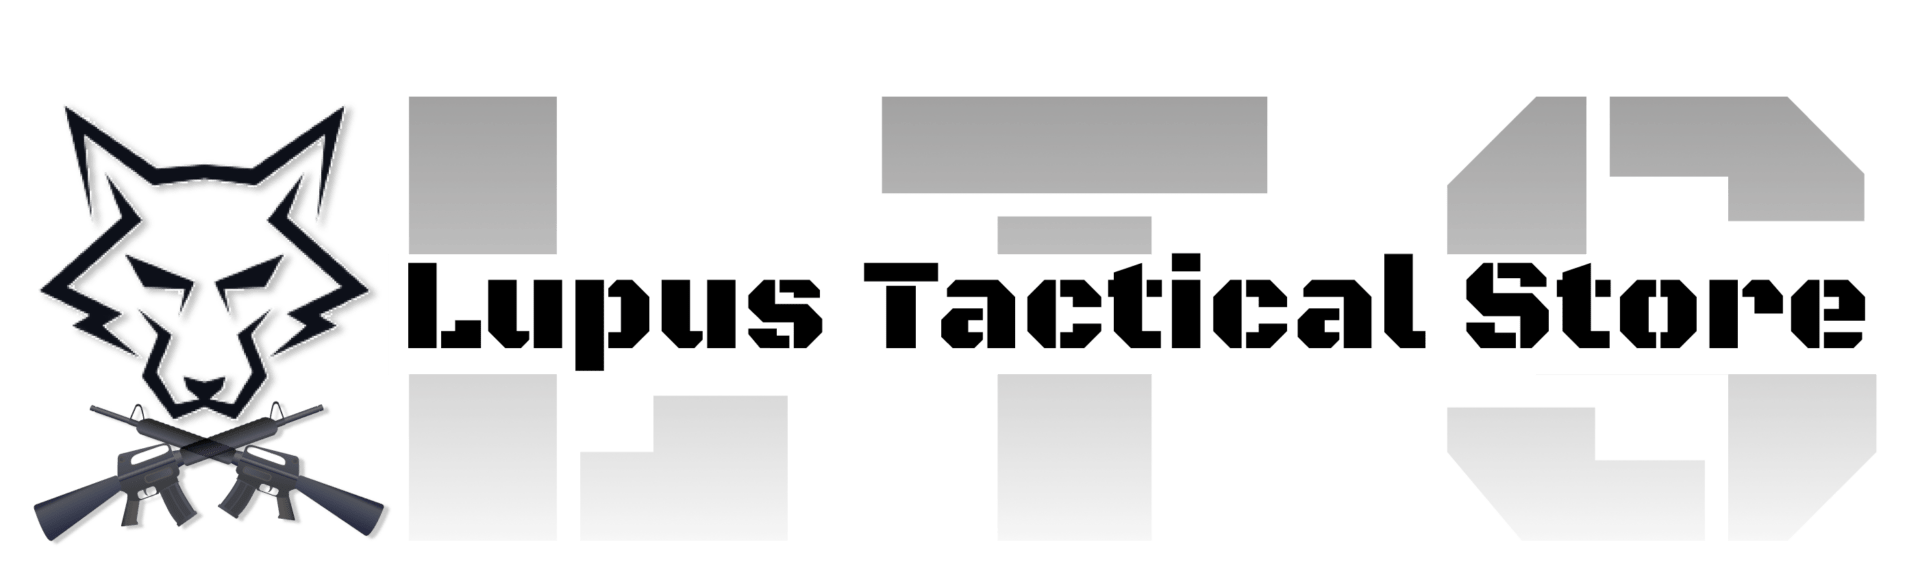 Lupus Tactical Store Logo